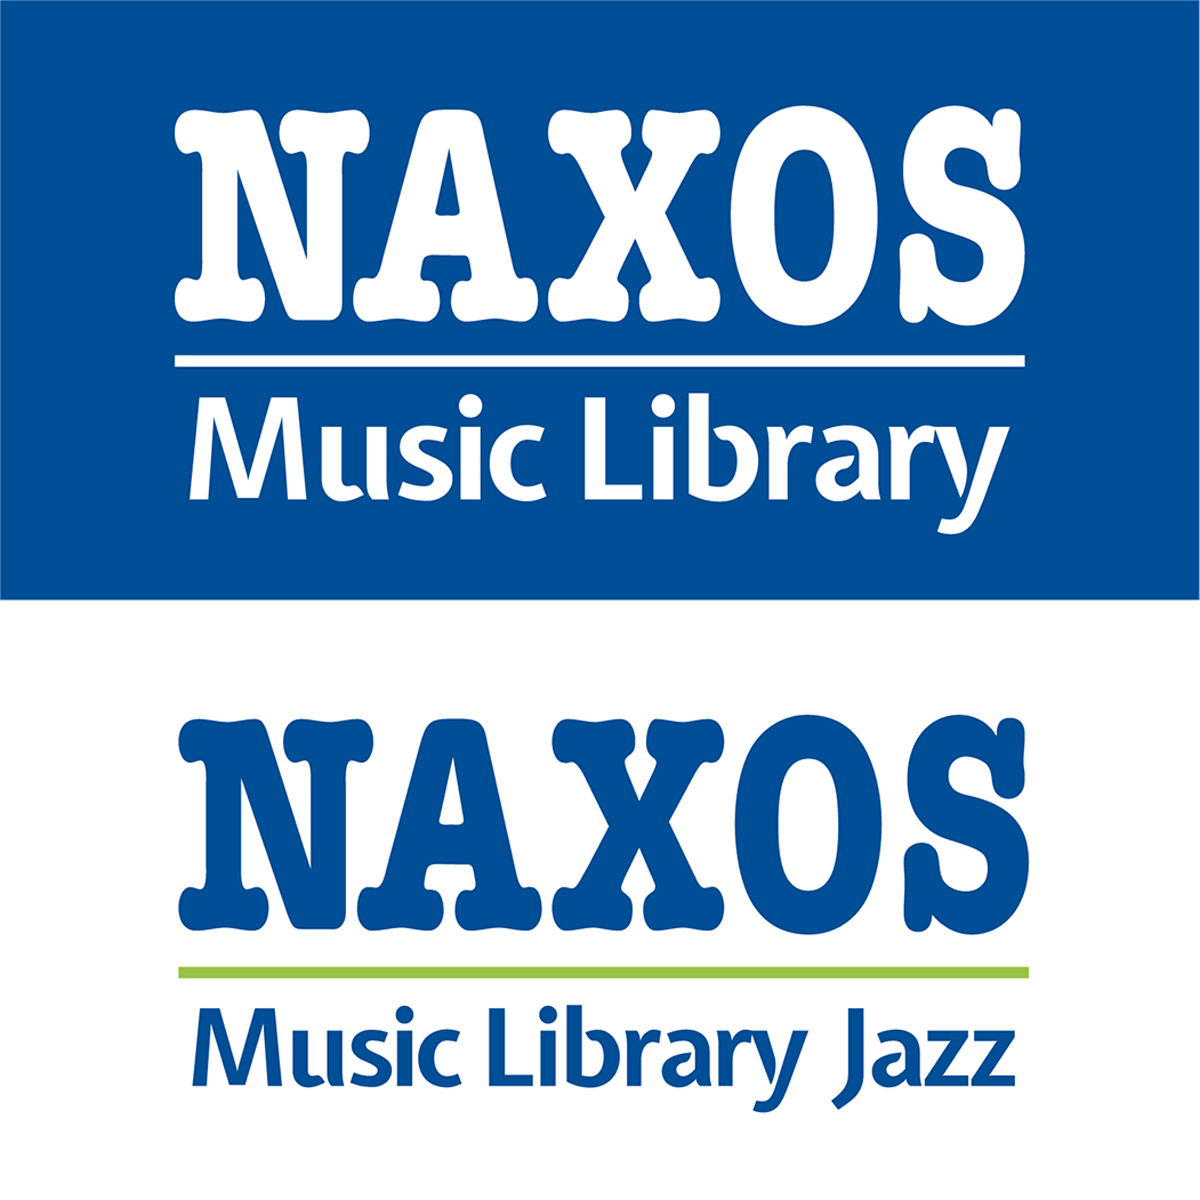 Naxos Music Library